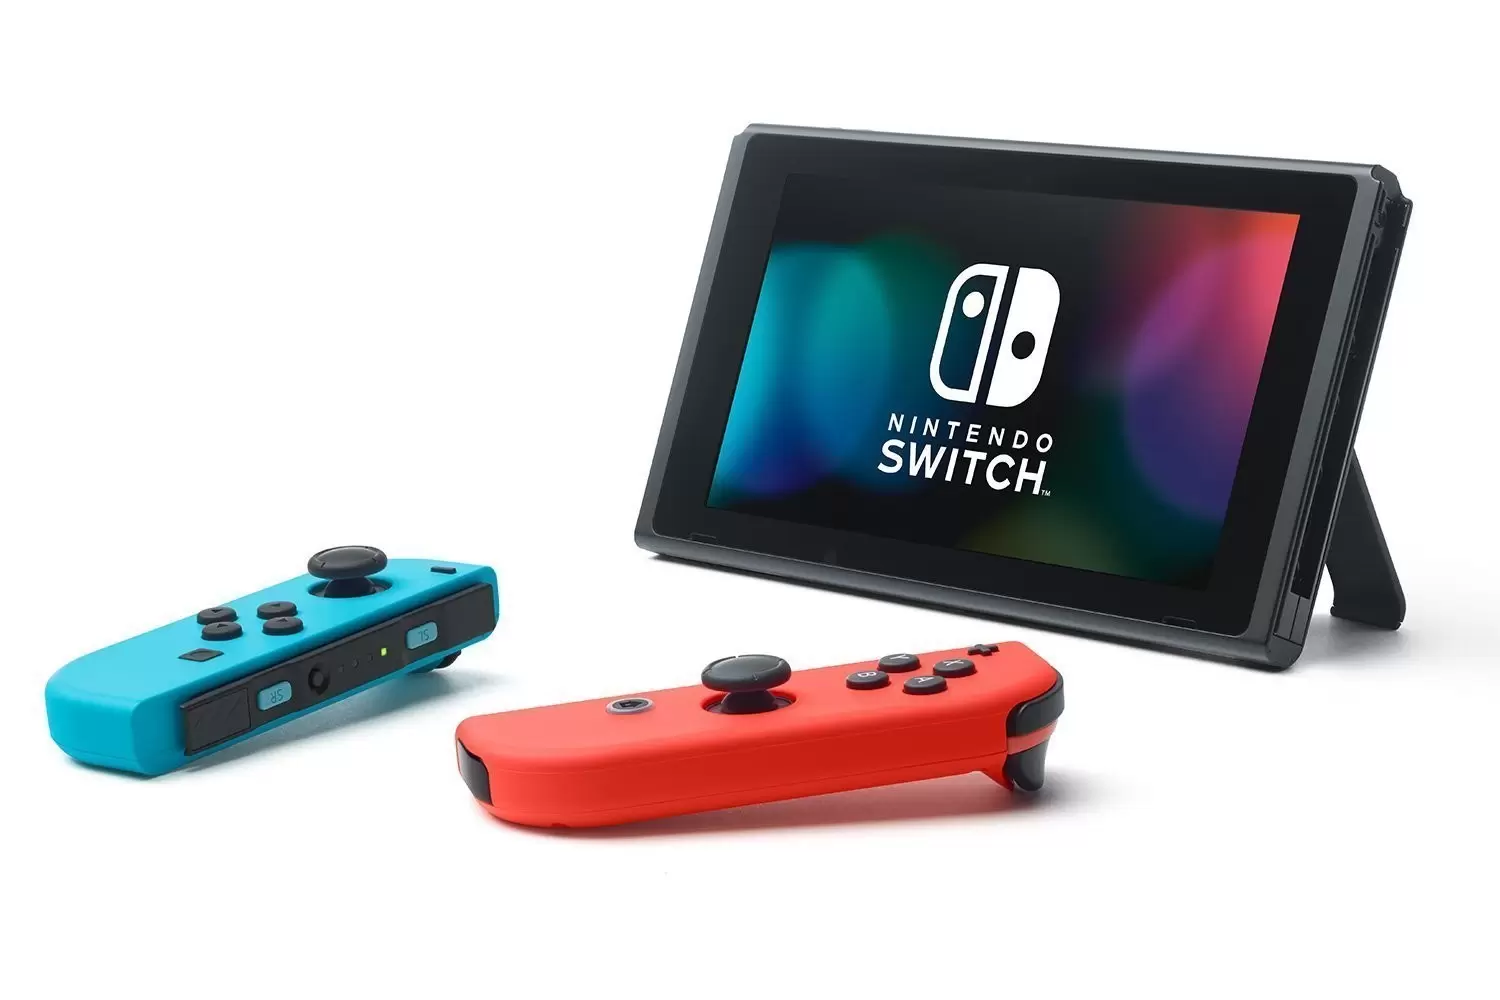 Matériel Nintendo Switch - Nintendo Switch avec Joy-con bleu rouge